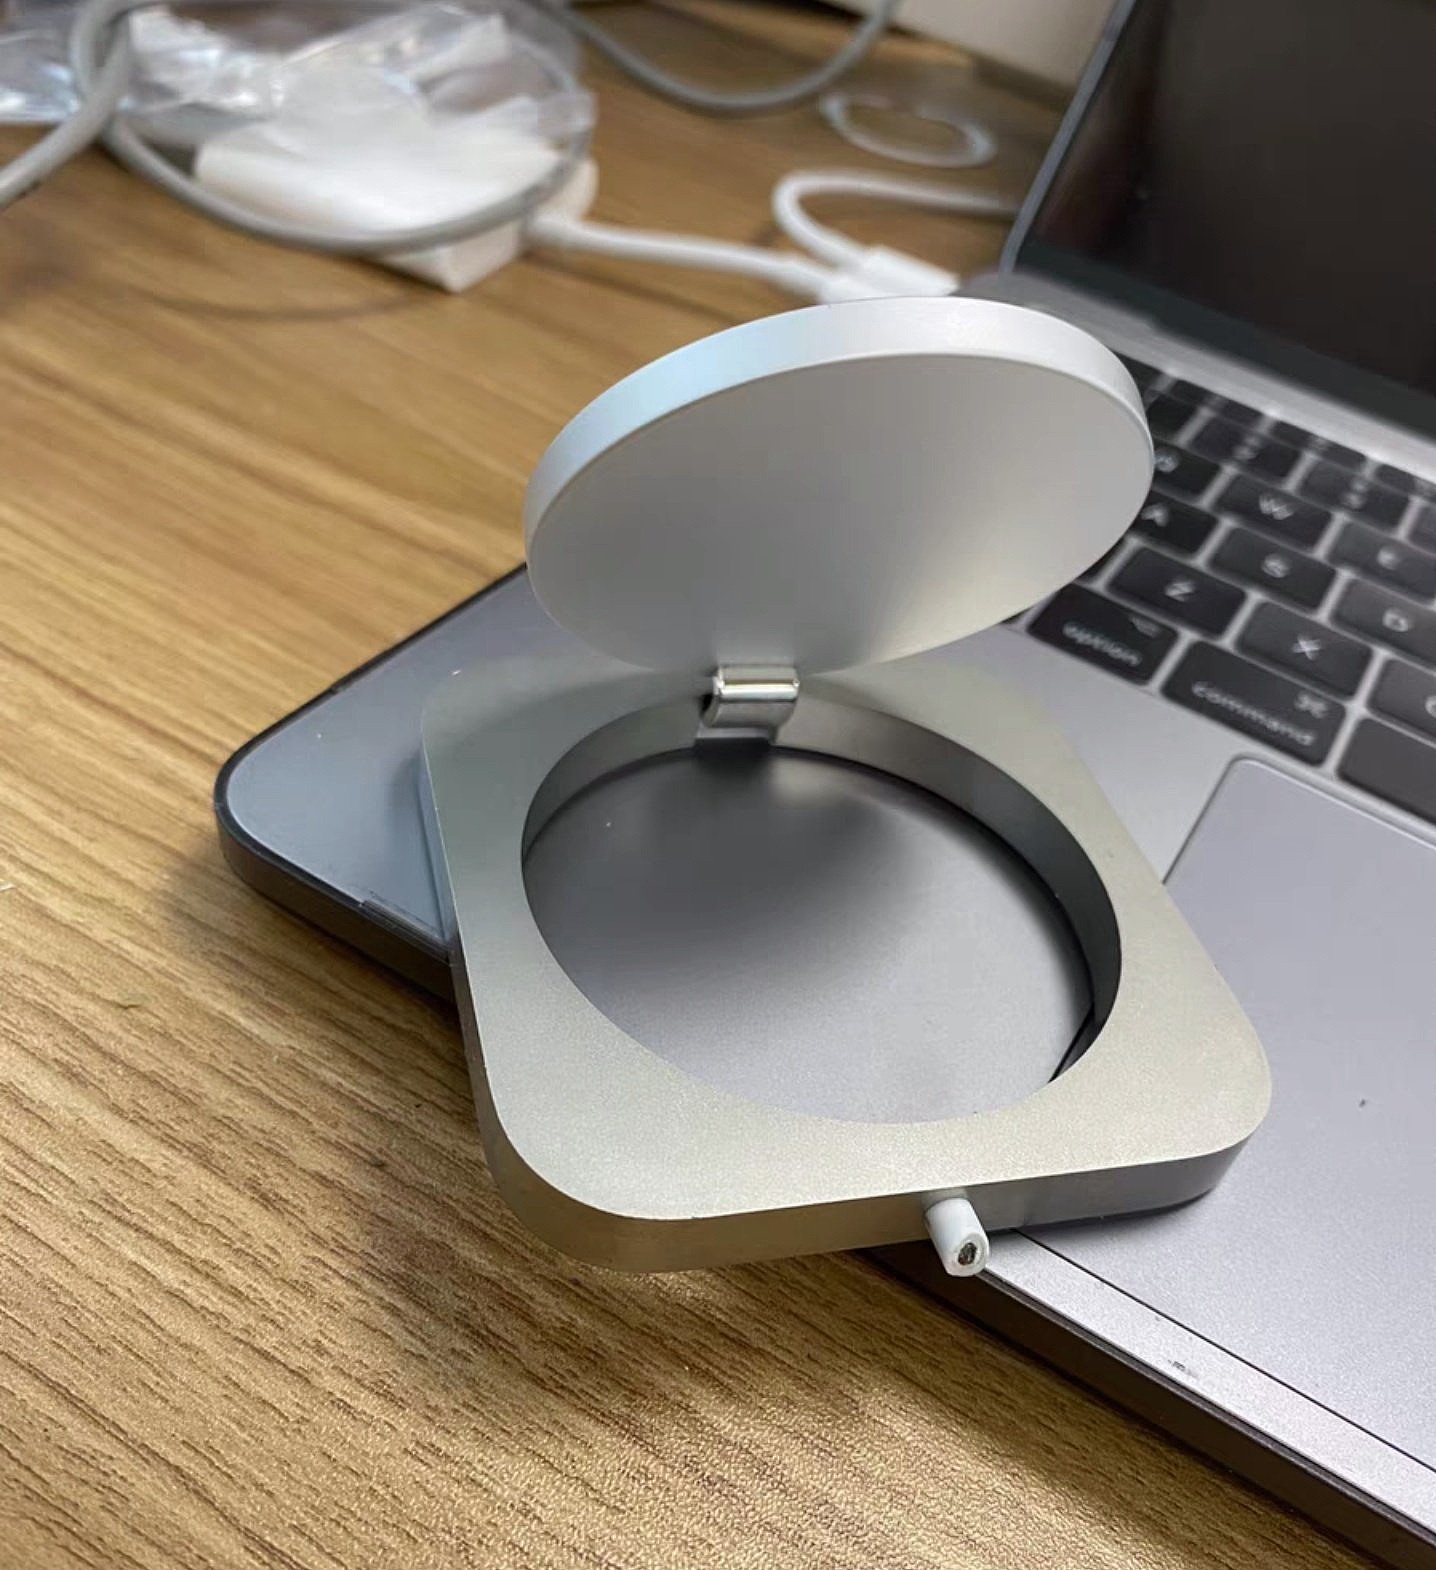 苹果尚未发布的 Apple Magic Charger 充电配件曝光 - 4